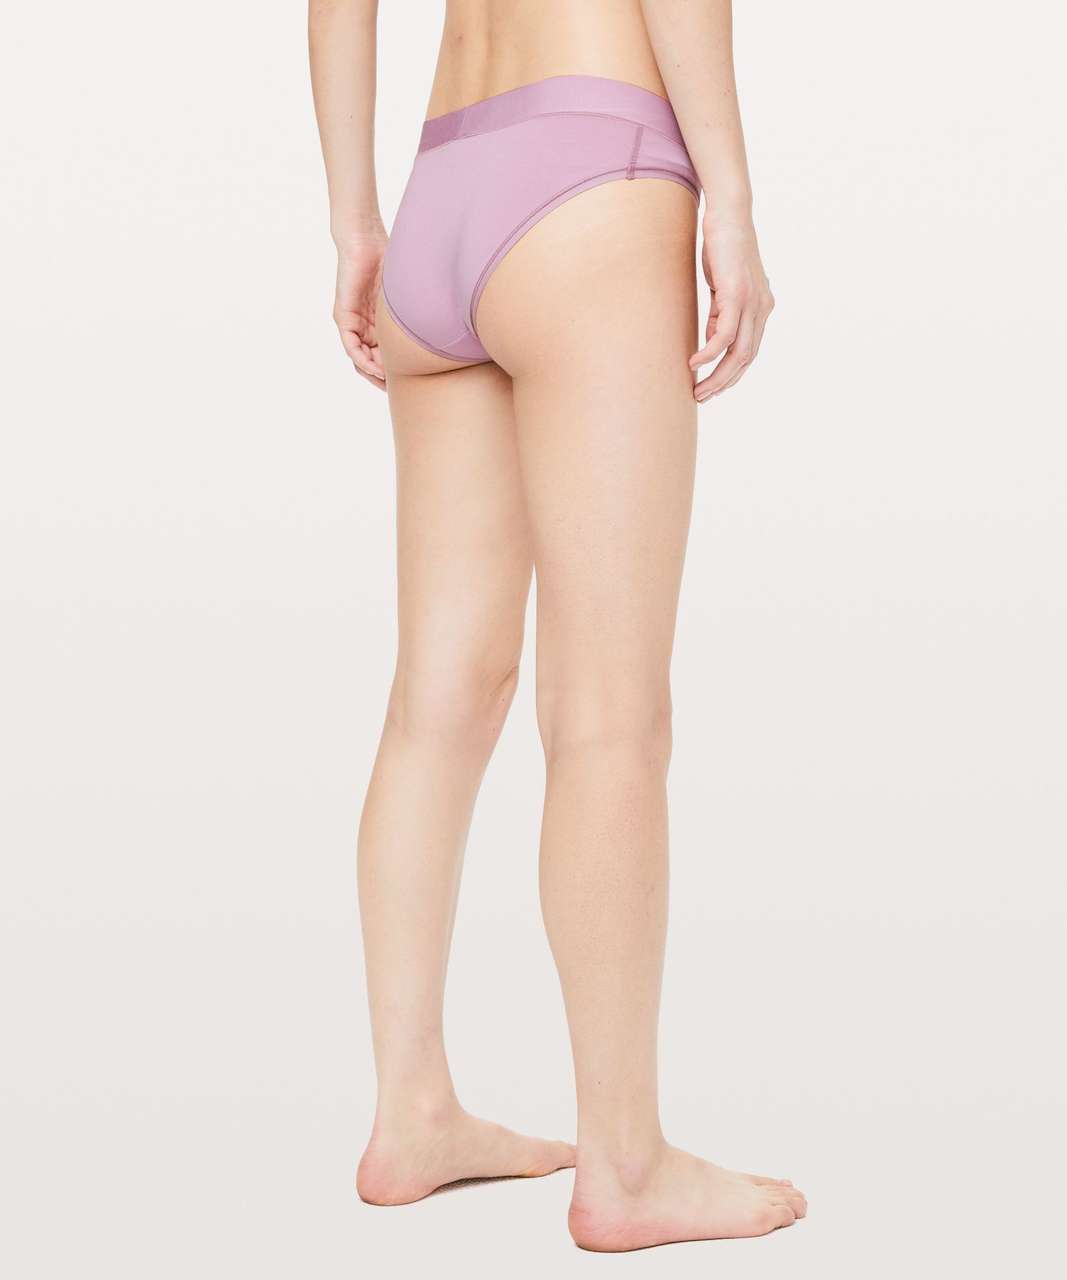 https://storage.googleapis.com/lulu-fanatics/product/69649/1280/lululemon-soft-breathable-low-rise-bikini-underwear-antoinette-036731-376688.jpg